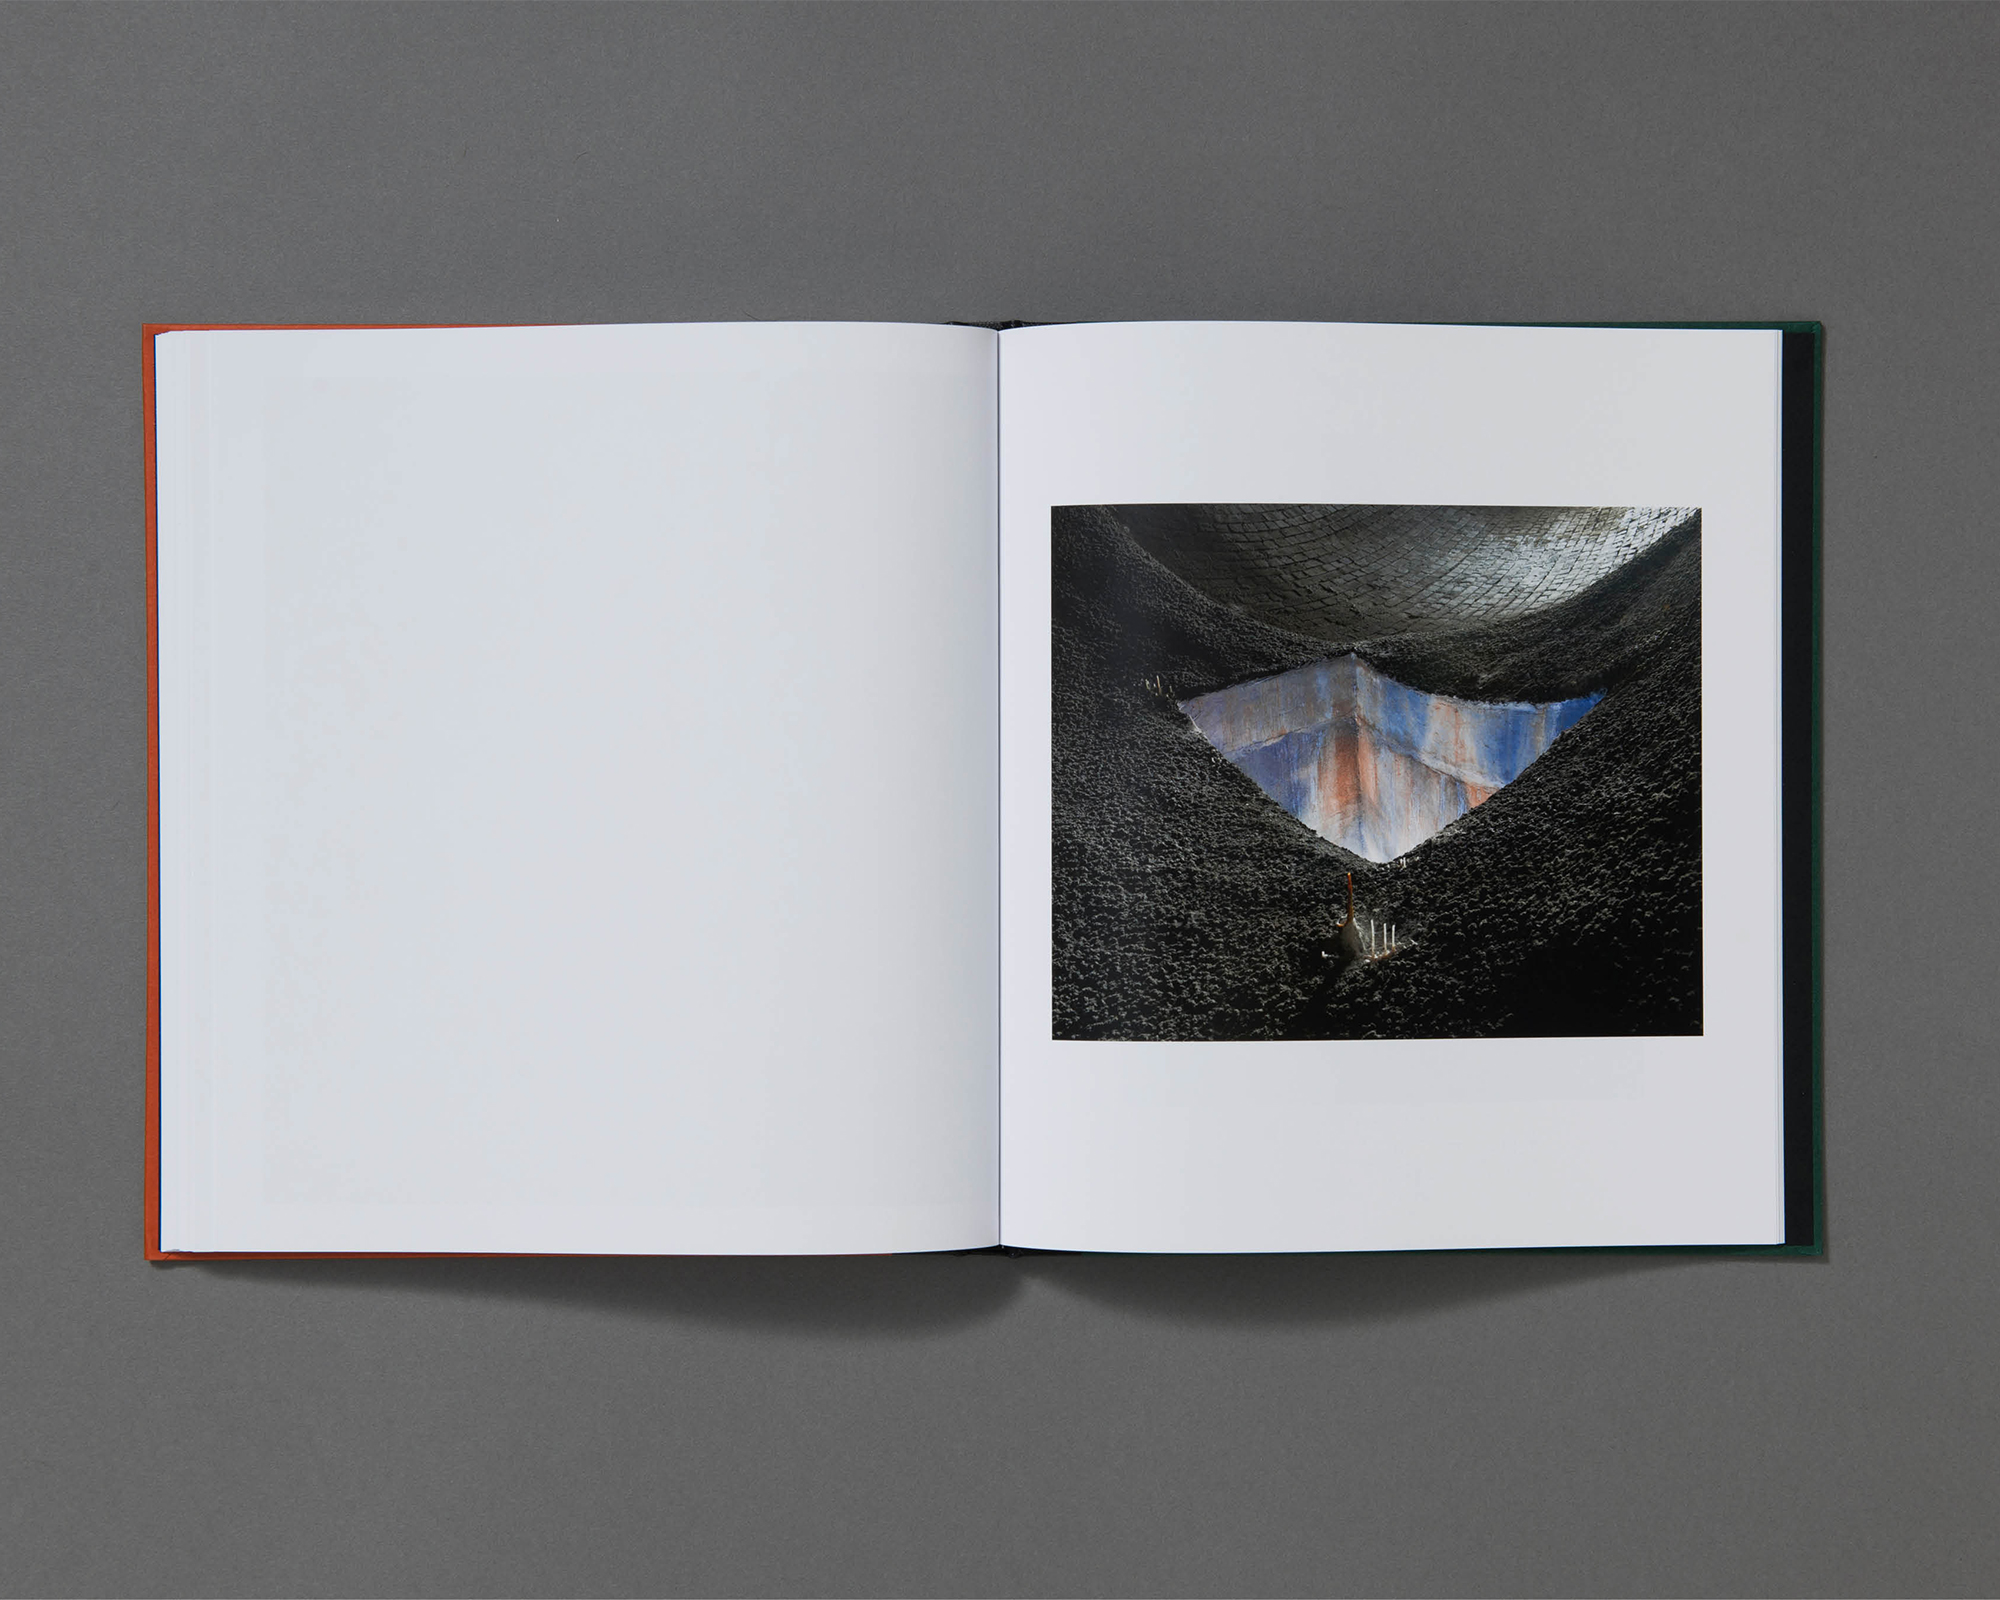  Storm Drain, Pigment Print, 102 x 127 cm, 2015, Edition of 7 